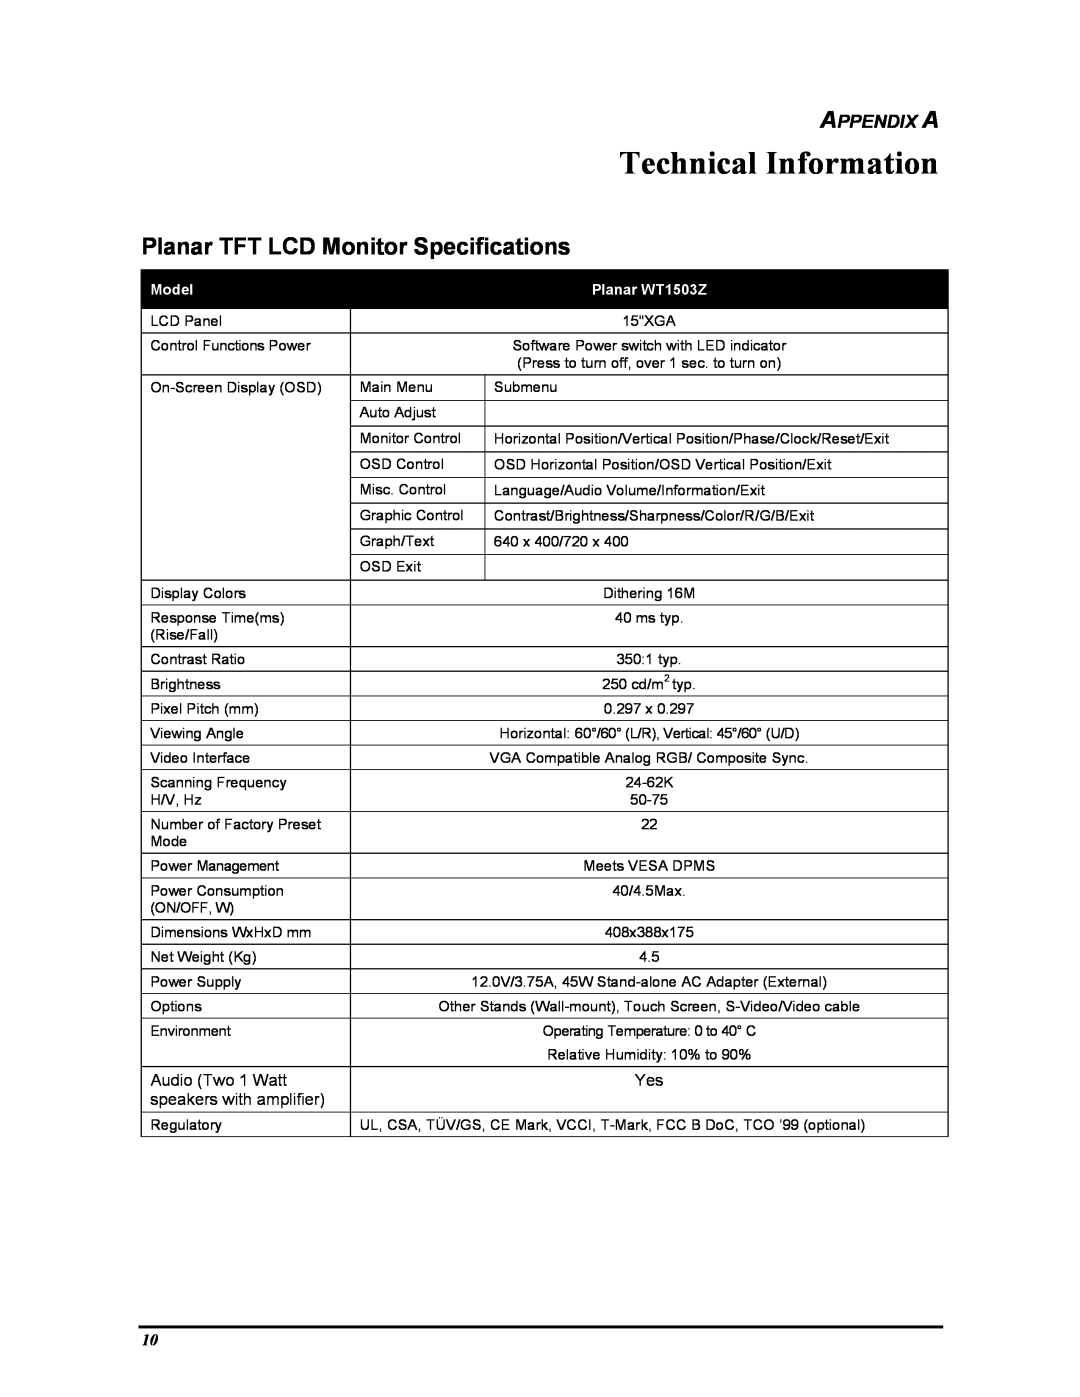 Planar PV150 manual Technical Information, Planar TFT LCD Monitor Specifications, Appendix A, Model, Planar WT1503Z 